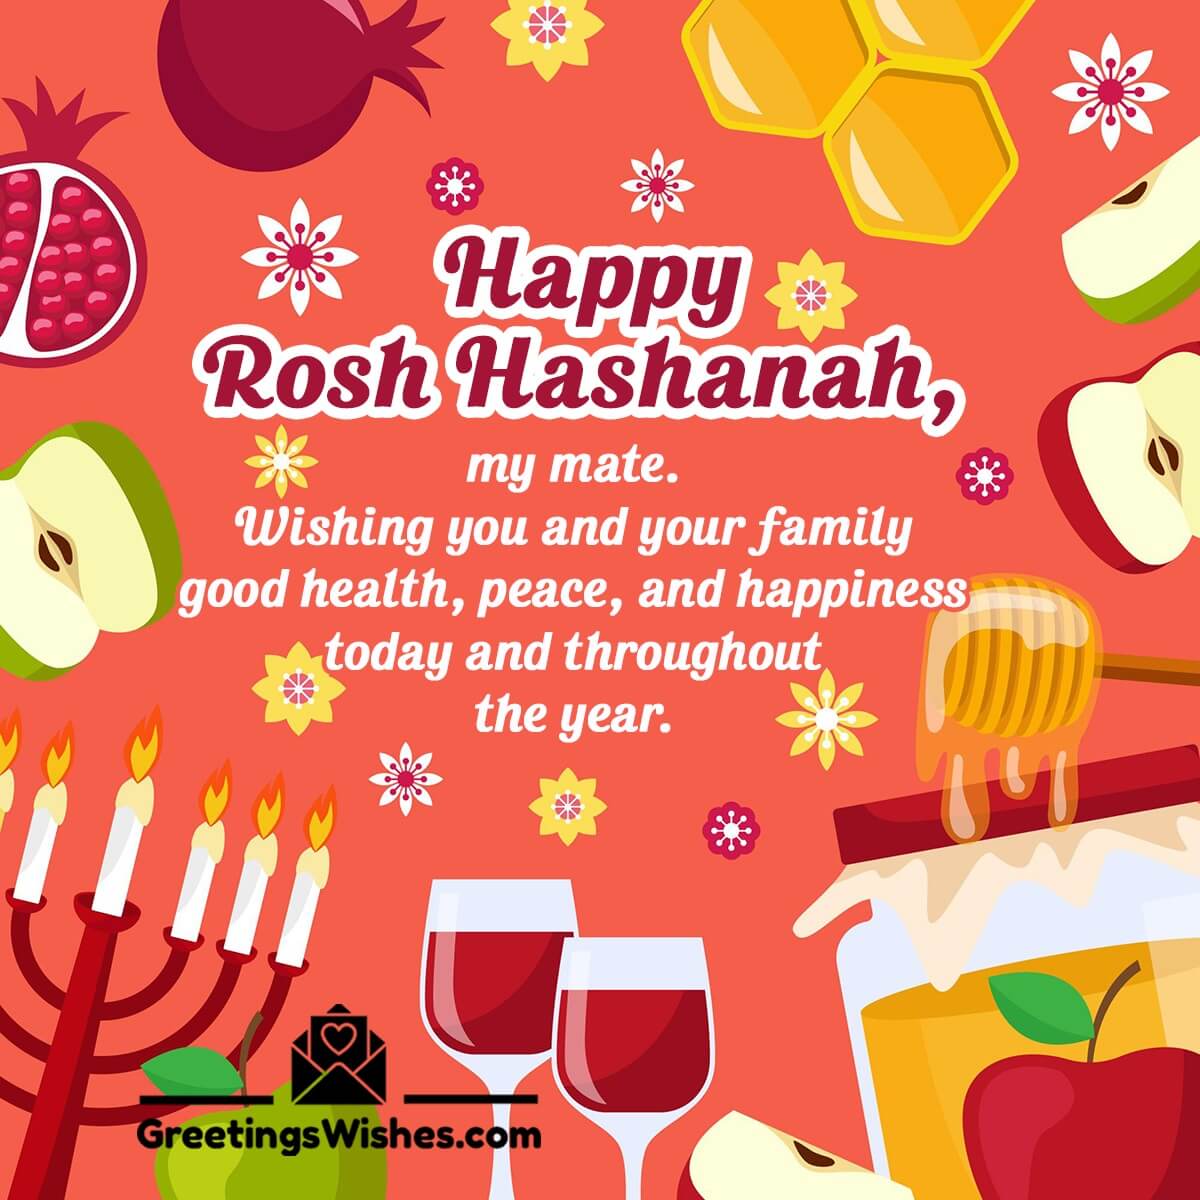 Happy Rosh Hashanah Wishes For Friend